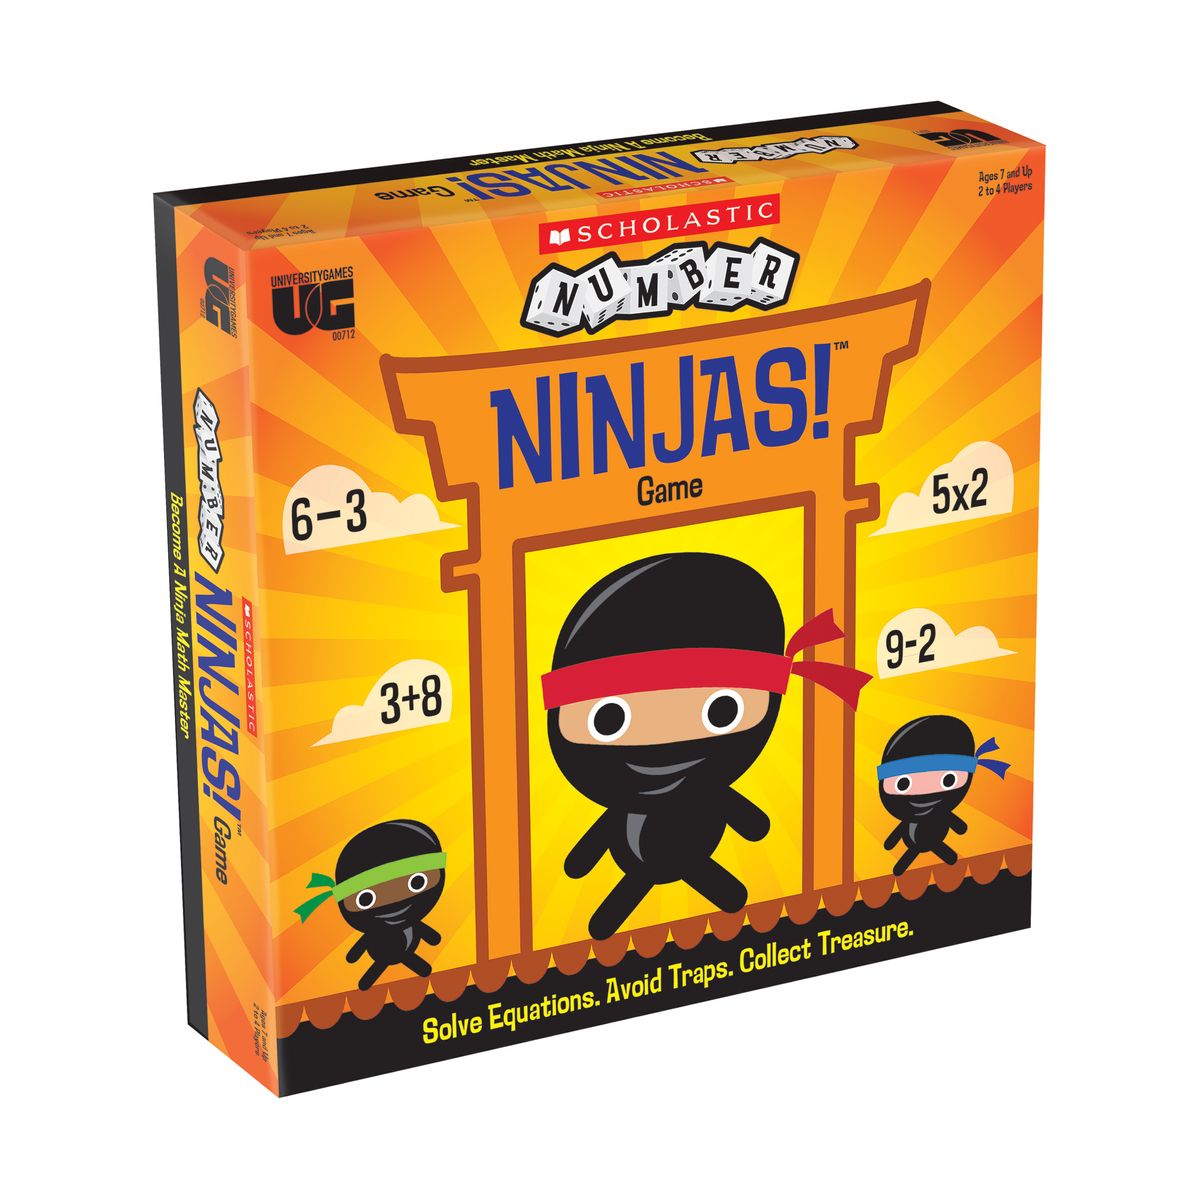 [RDY] [送料無料] Scholastic - Number Ninjas!ゲーム [楽天海外通販] | Scholastic - Number Ninjas! Game